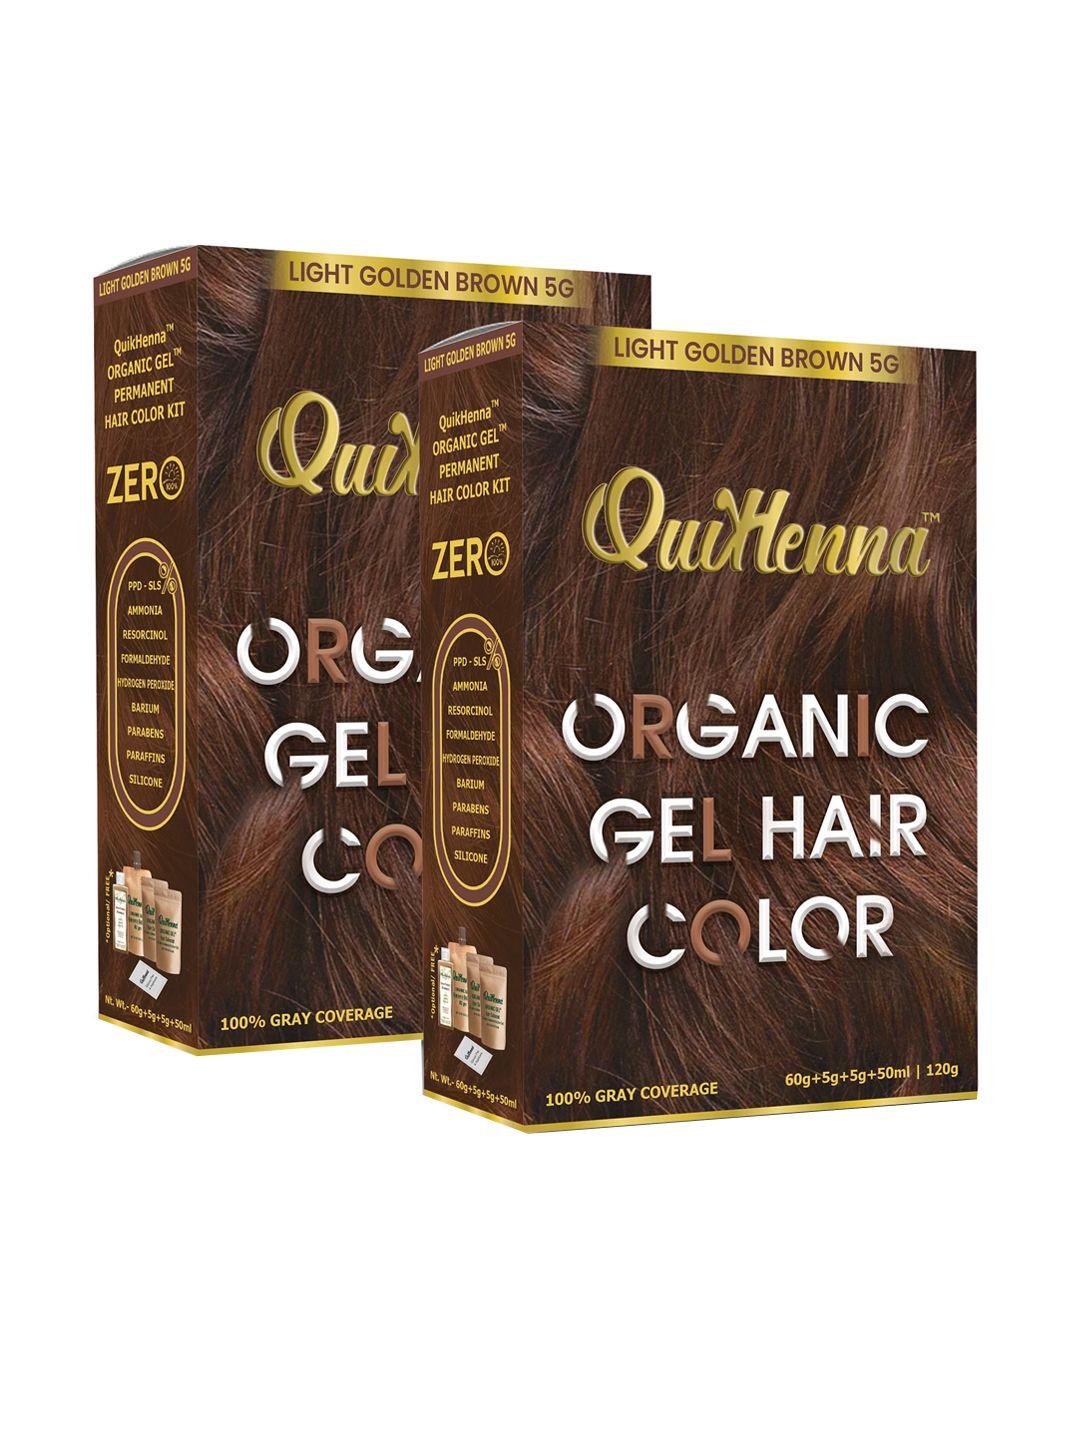 quikhenna set of 2 damage free organic gel hair color 120 g each - light golden brown 5g